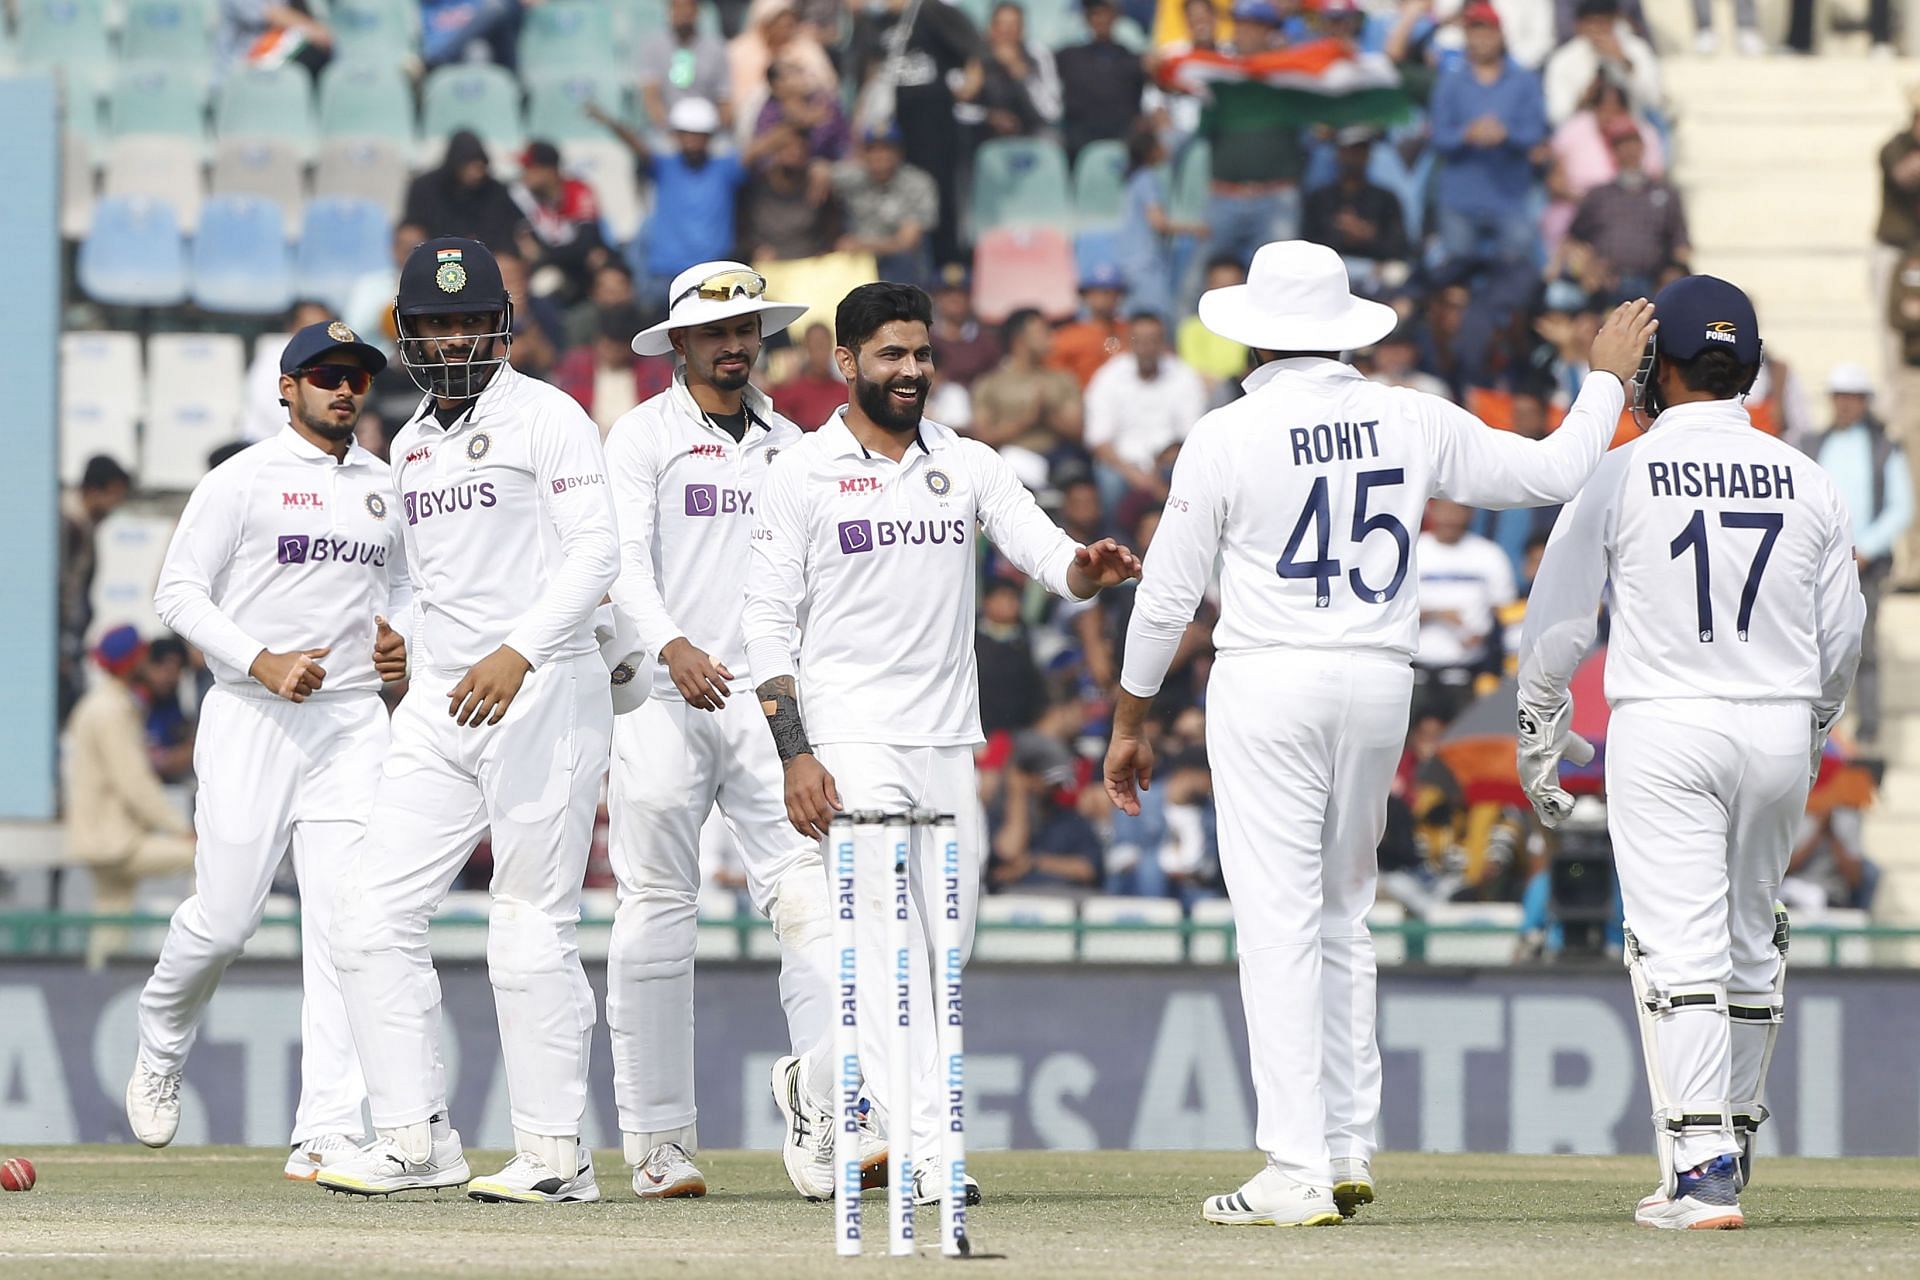 Ravindra Jadeja scored 175 runs and picked up nine wickets to destroy Sri Lanka inside three days